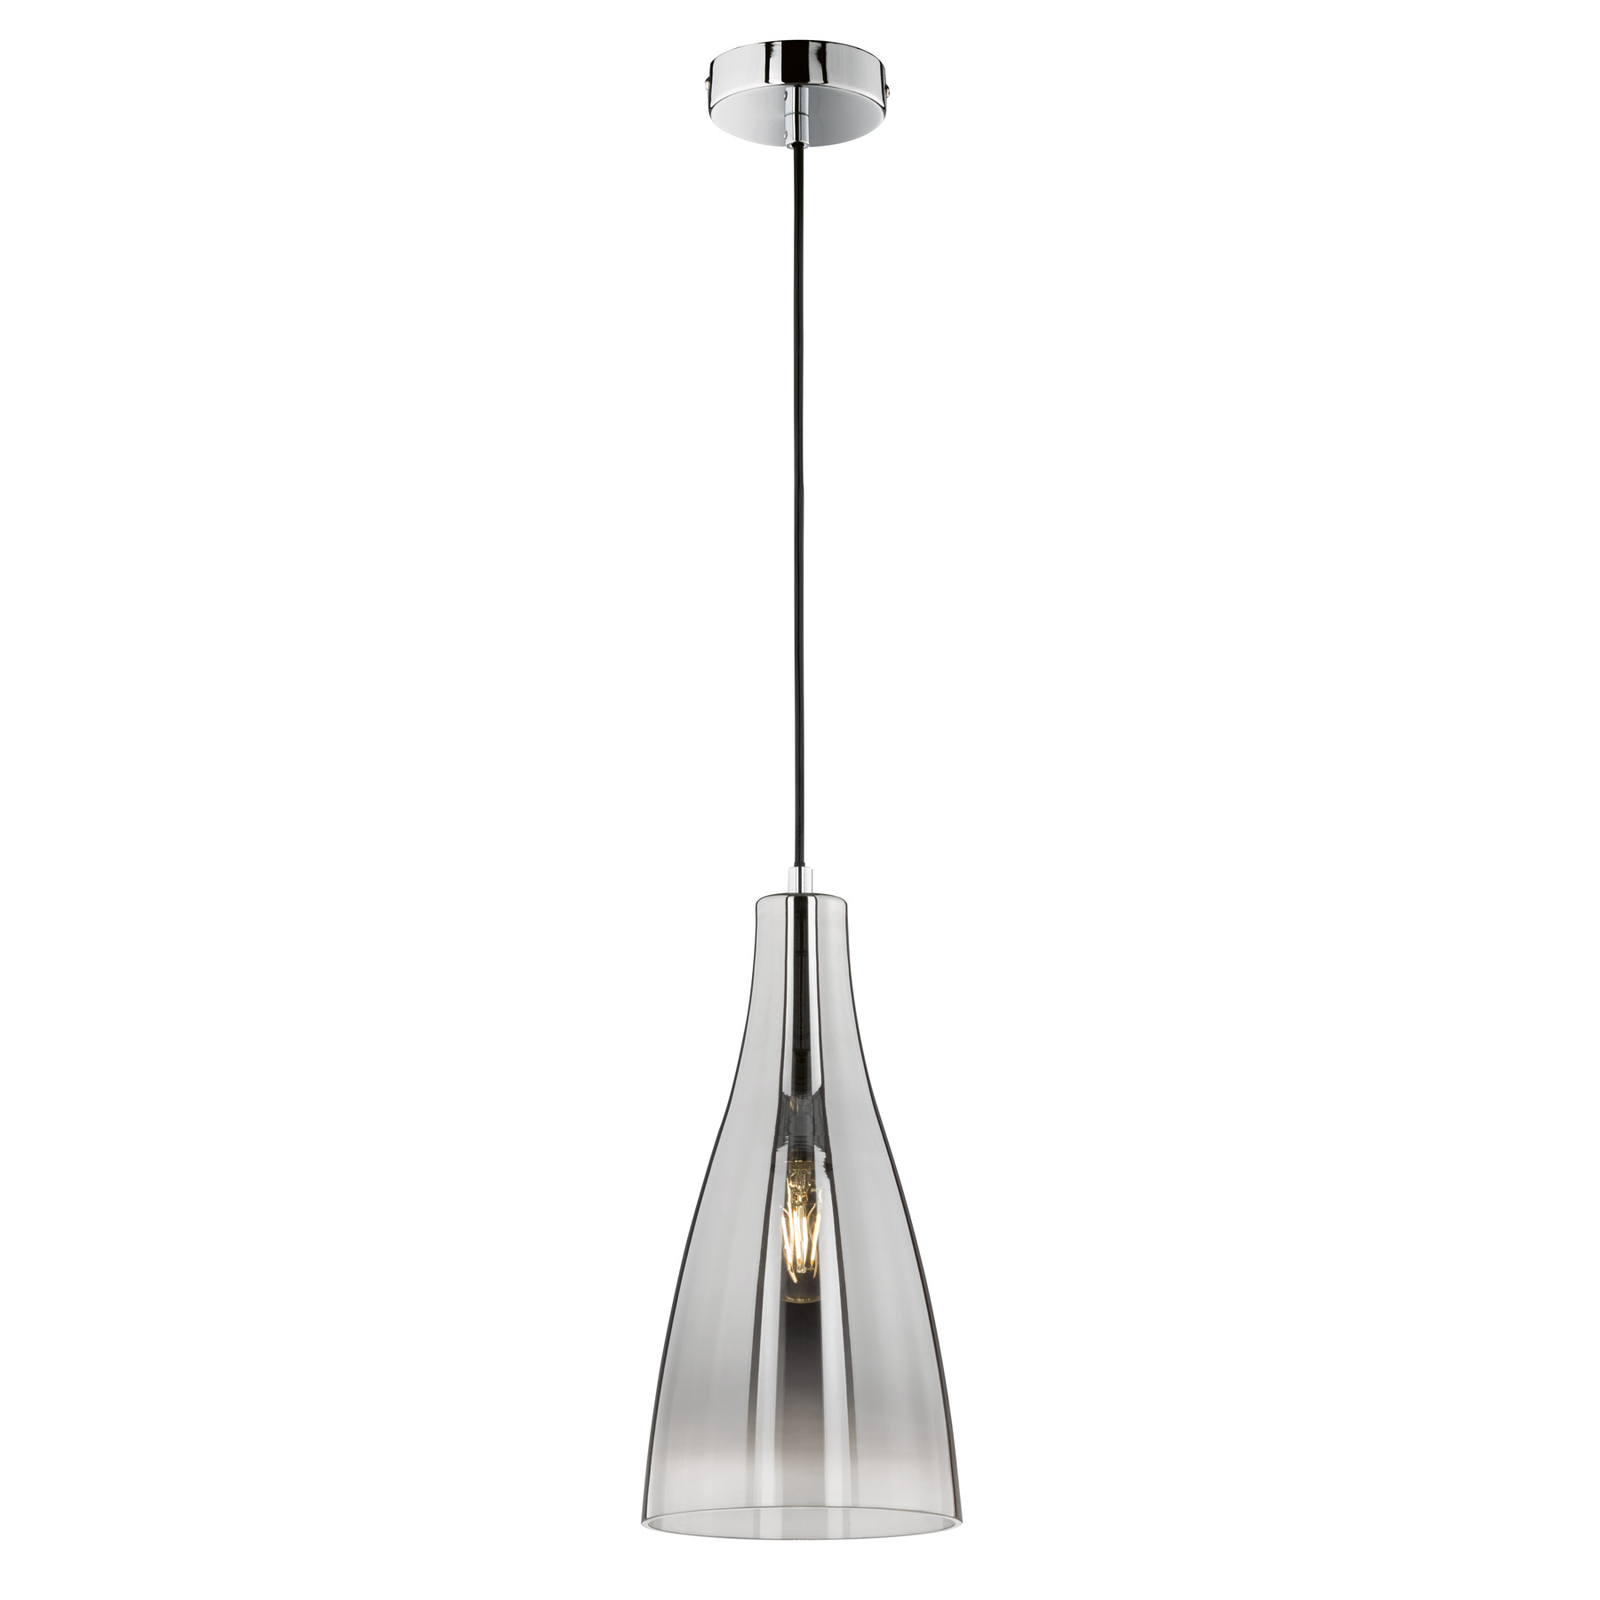 Hanglamp Zeal, chroom/mirrored-clear, Ø 23 cm